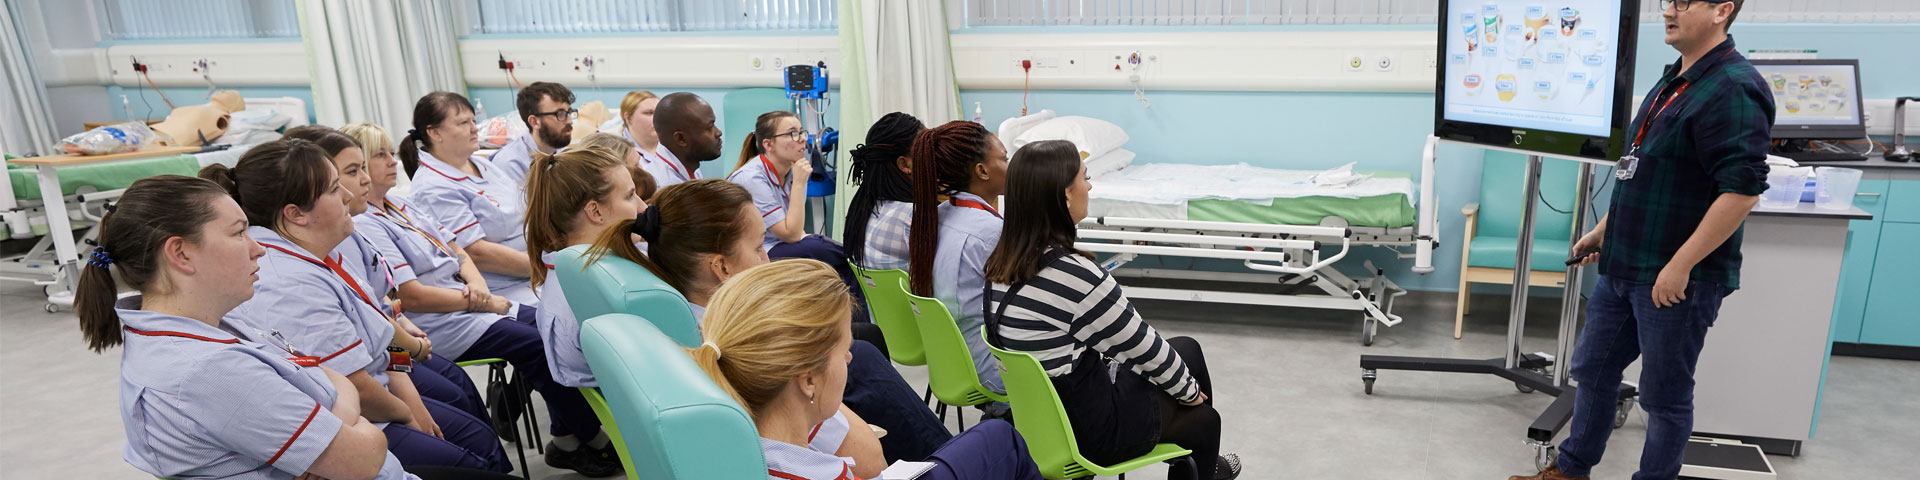 Nursing students in the nursing simulation ward